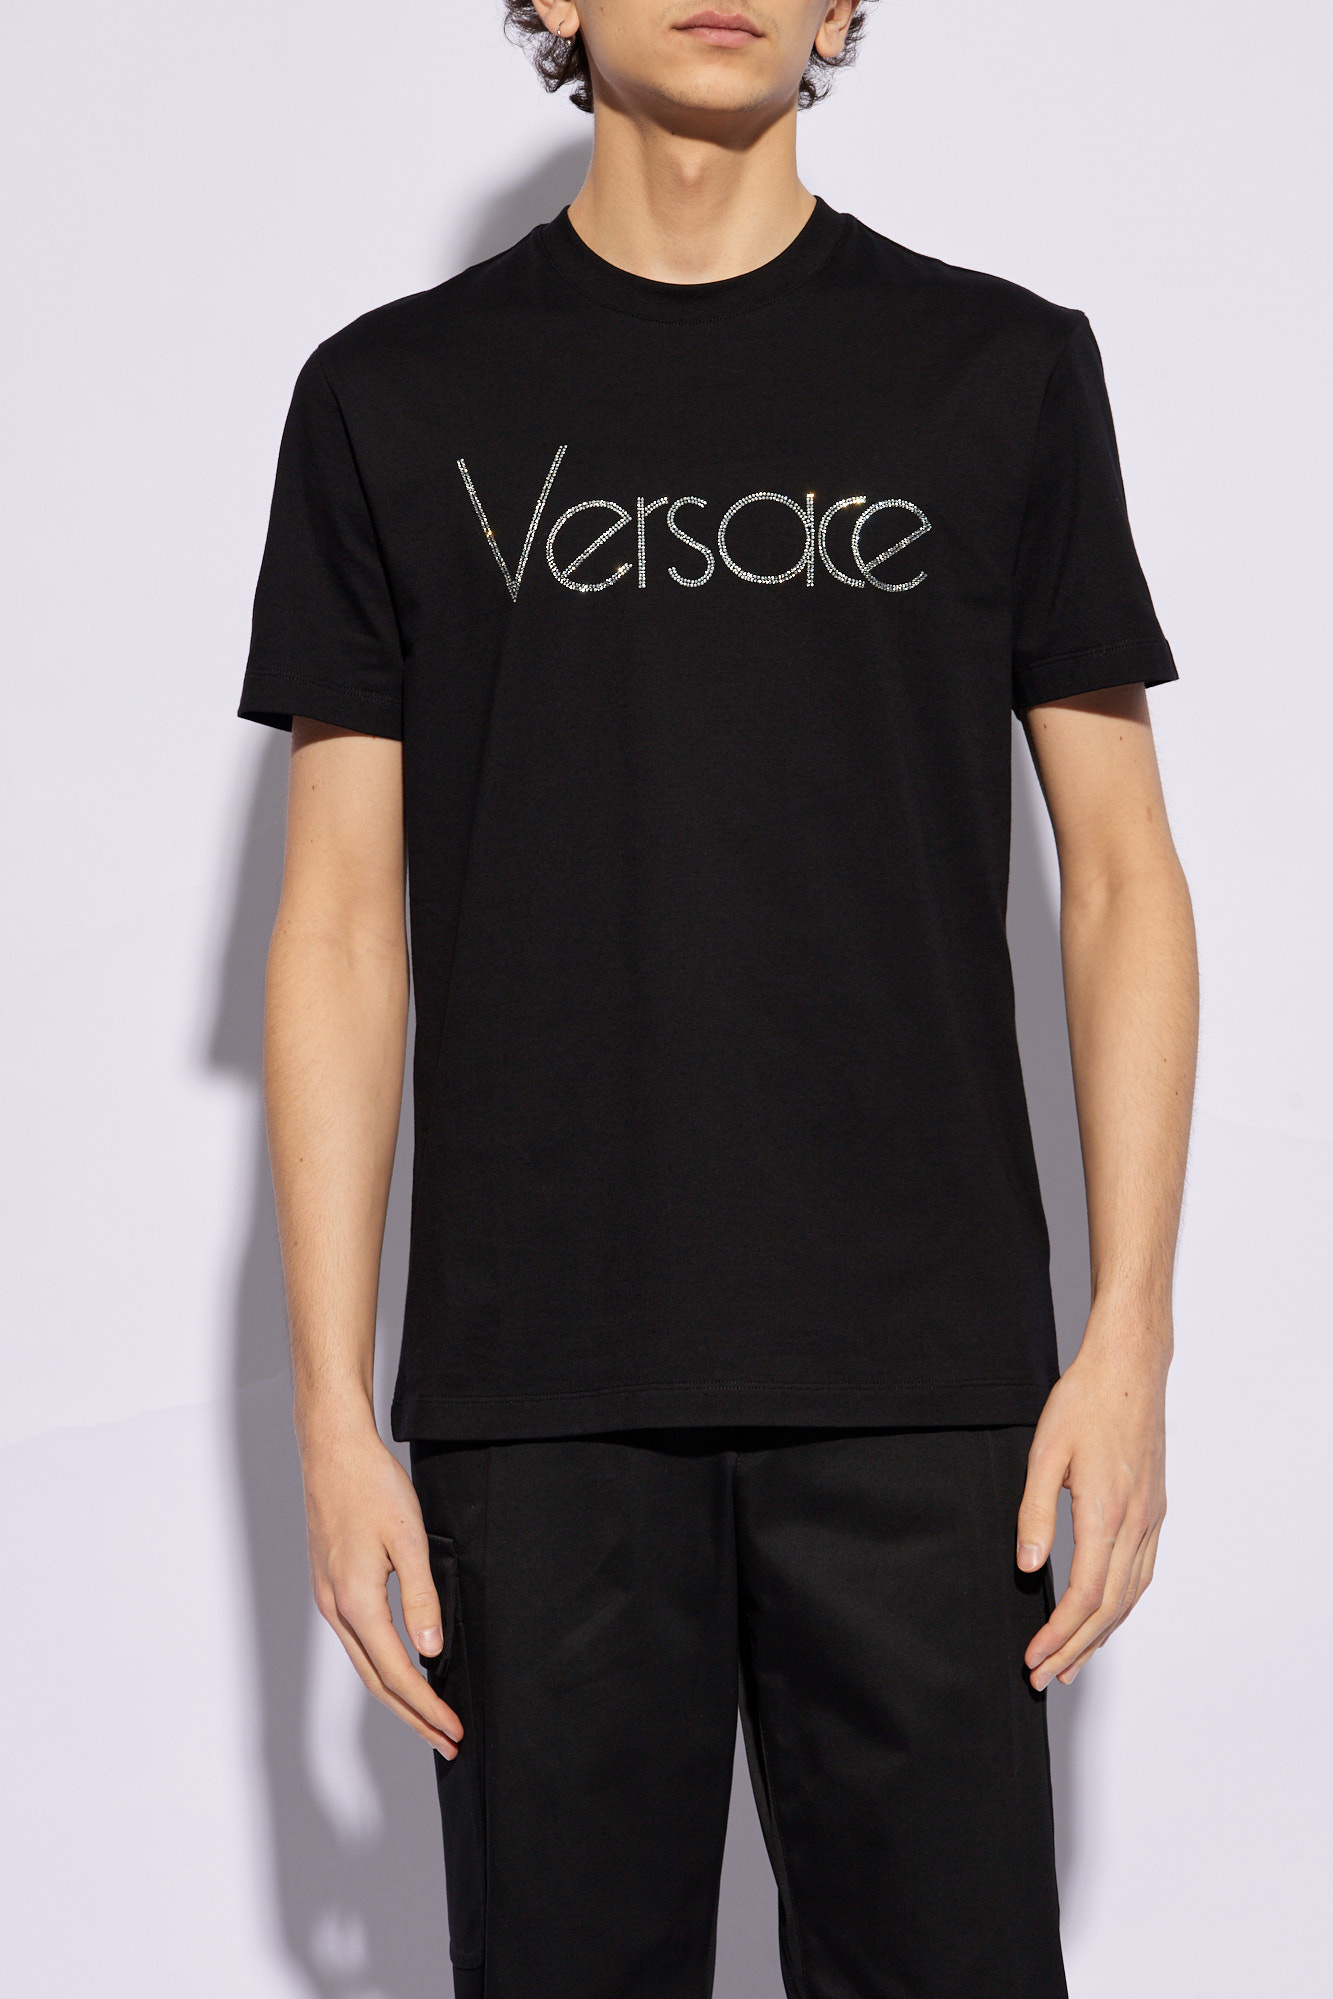 Versace Nike HWPO Entraînement T-shirt Homme